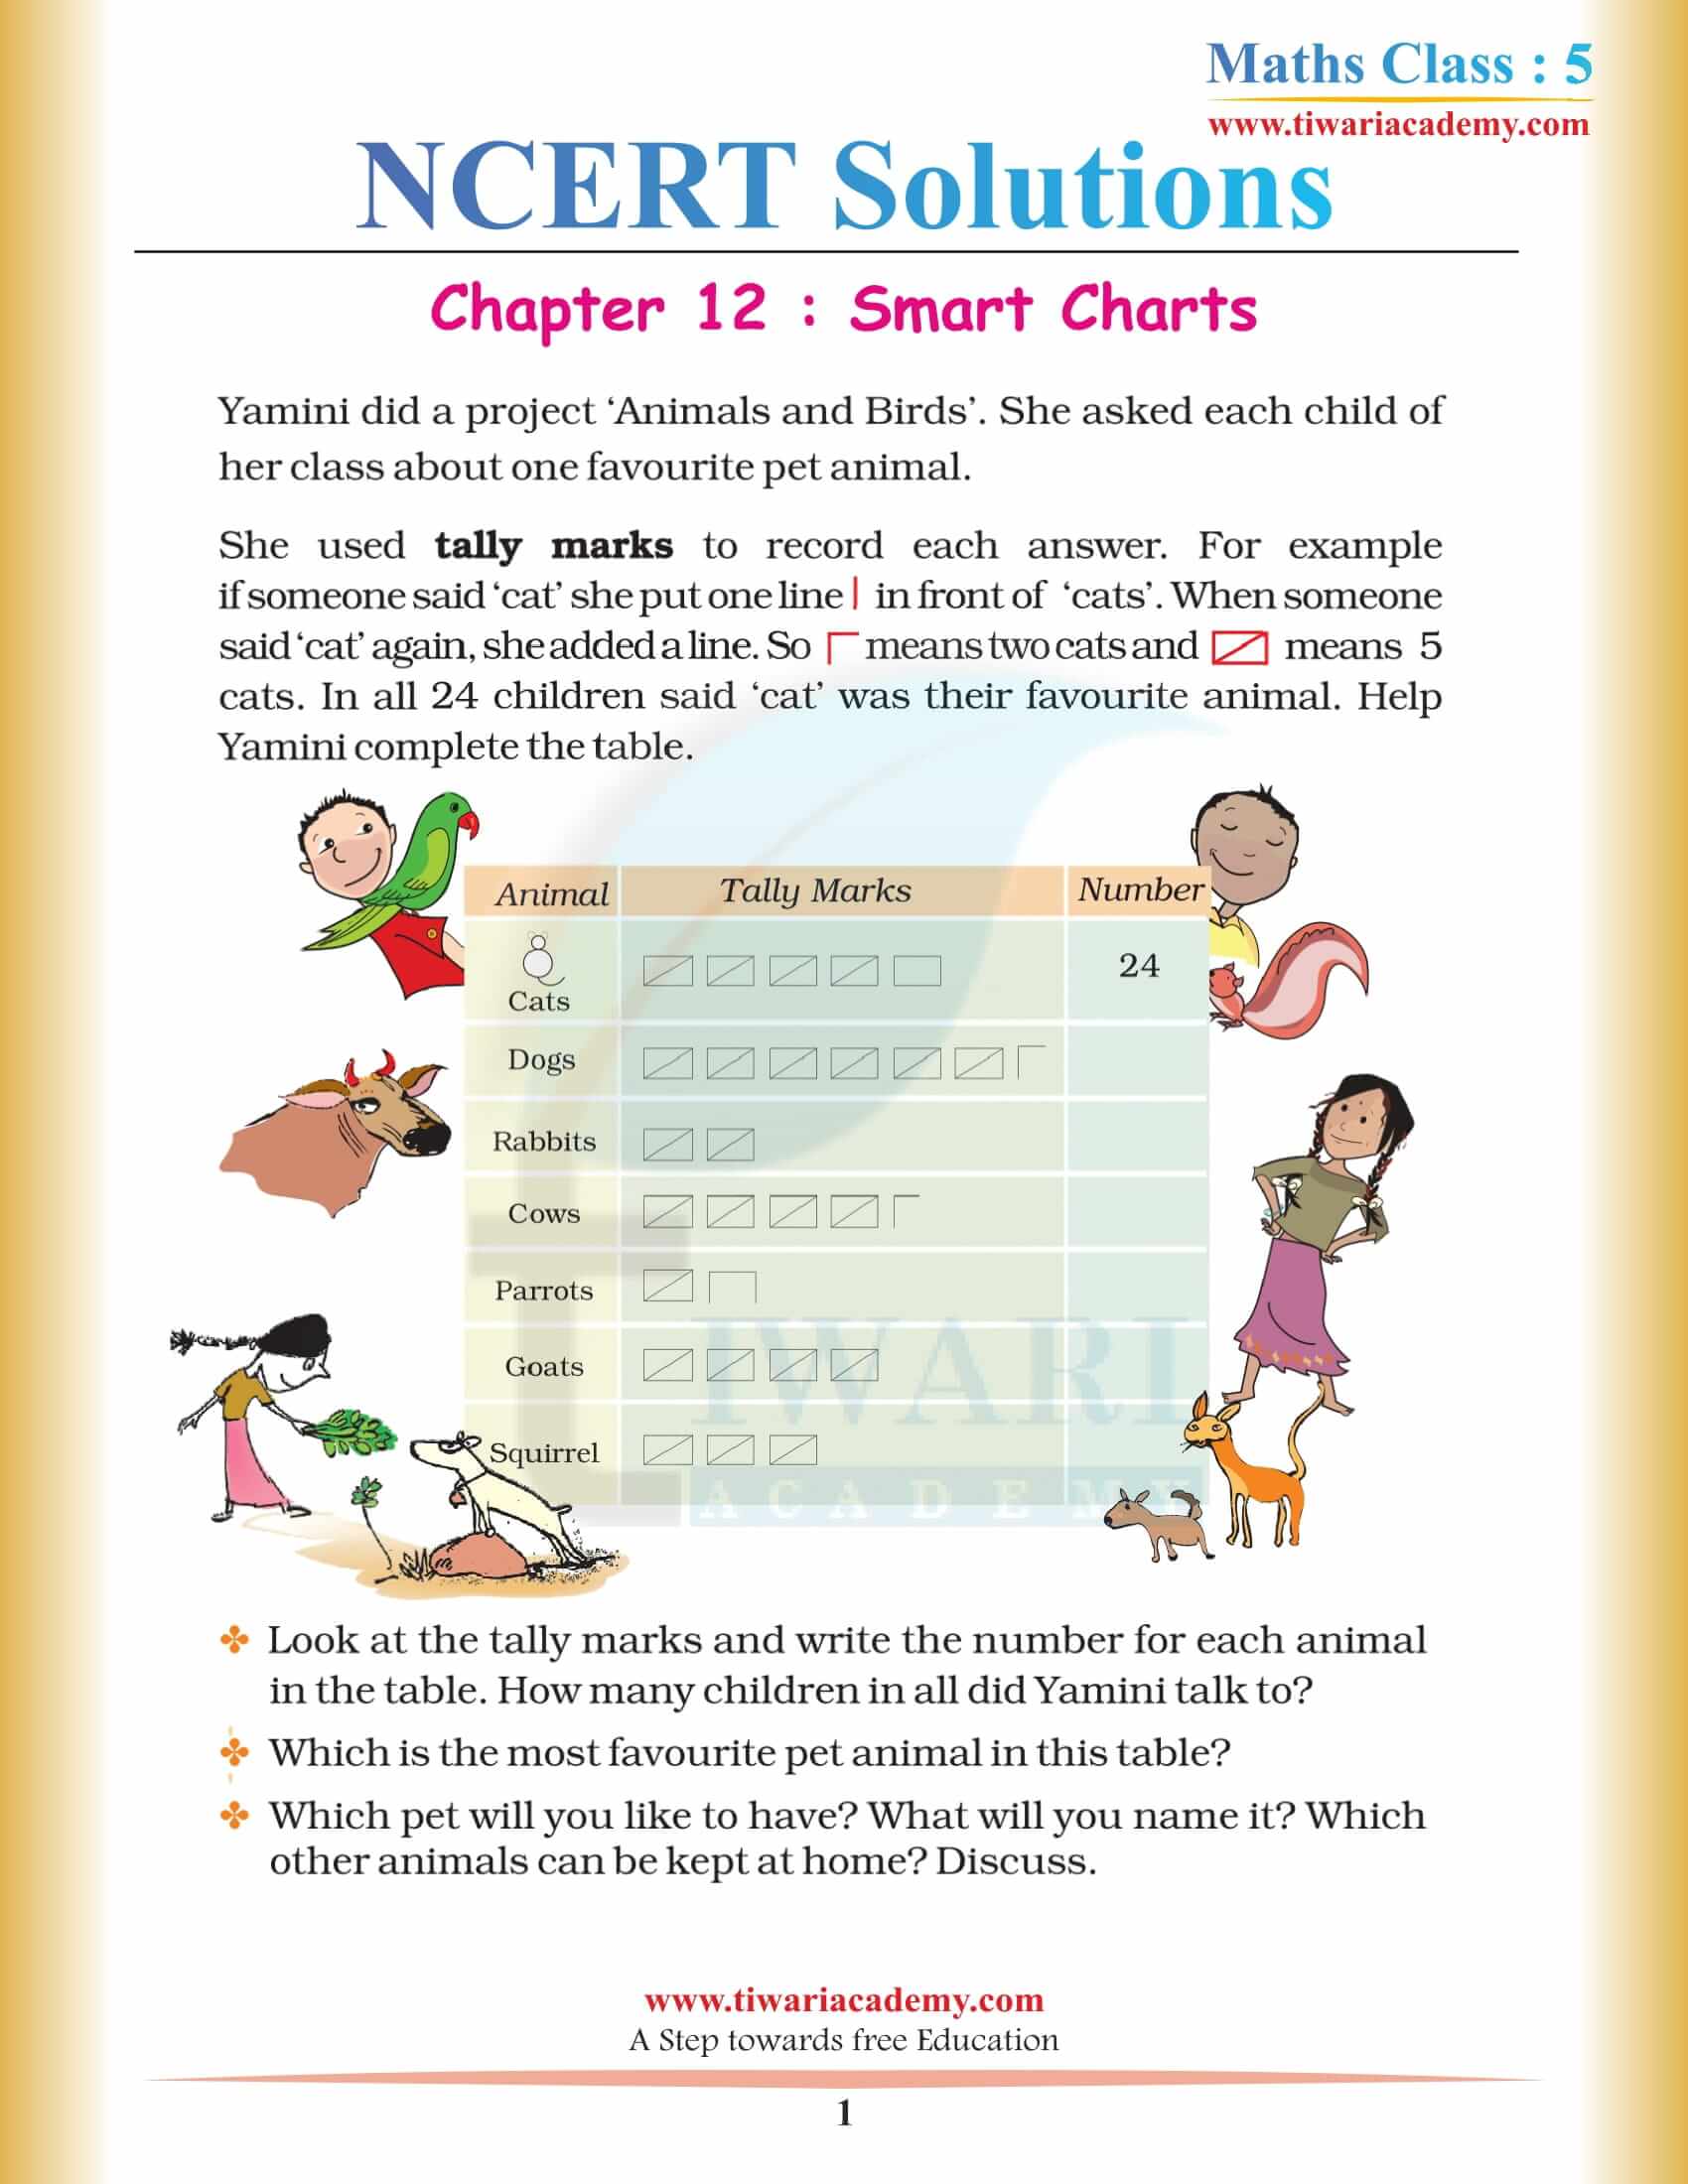 NCERT Solutions for Class 5 Maths Chapter 12 Smart Charts